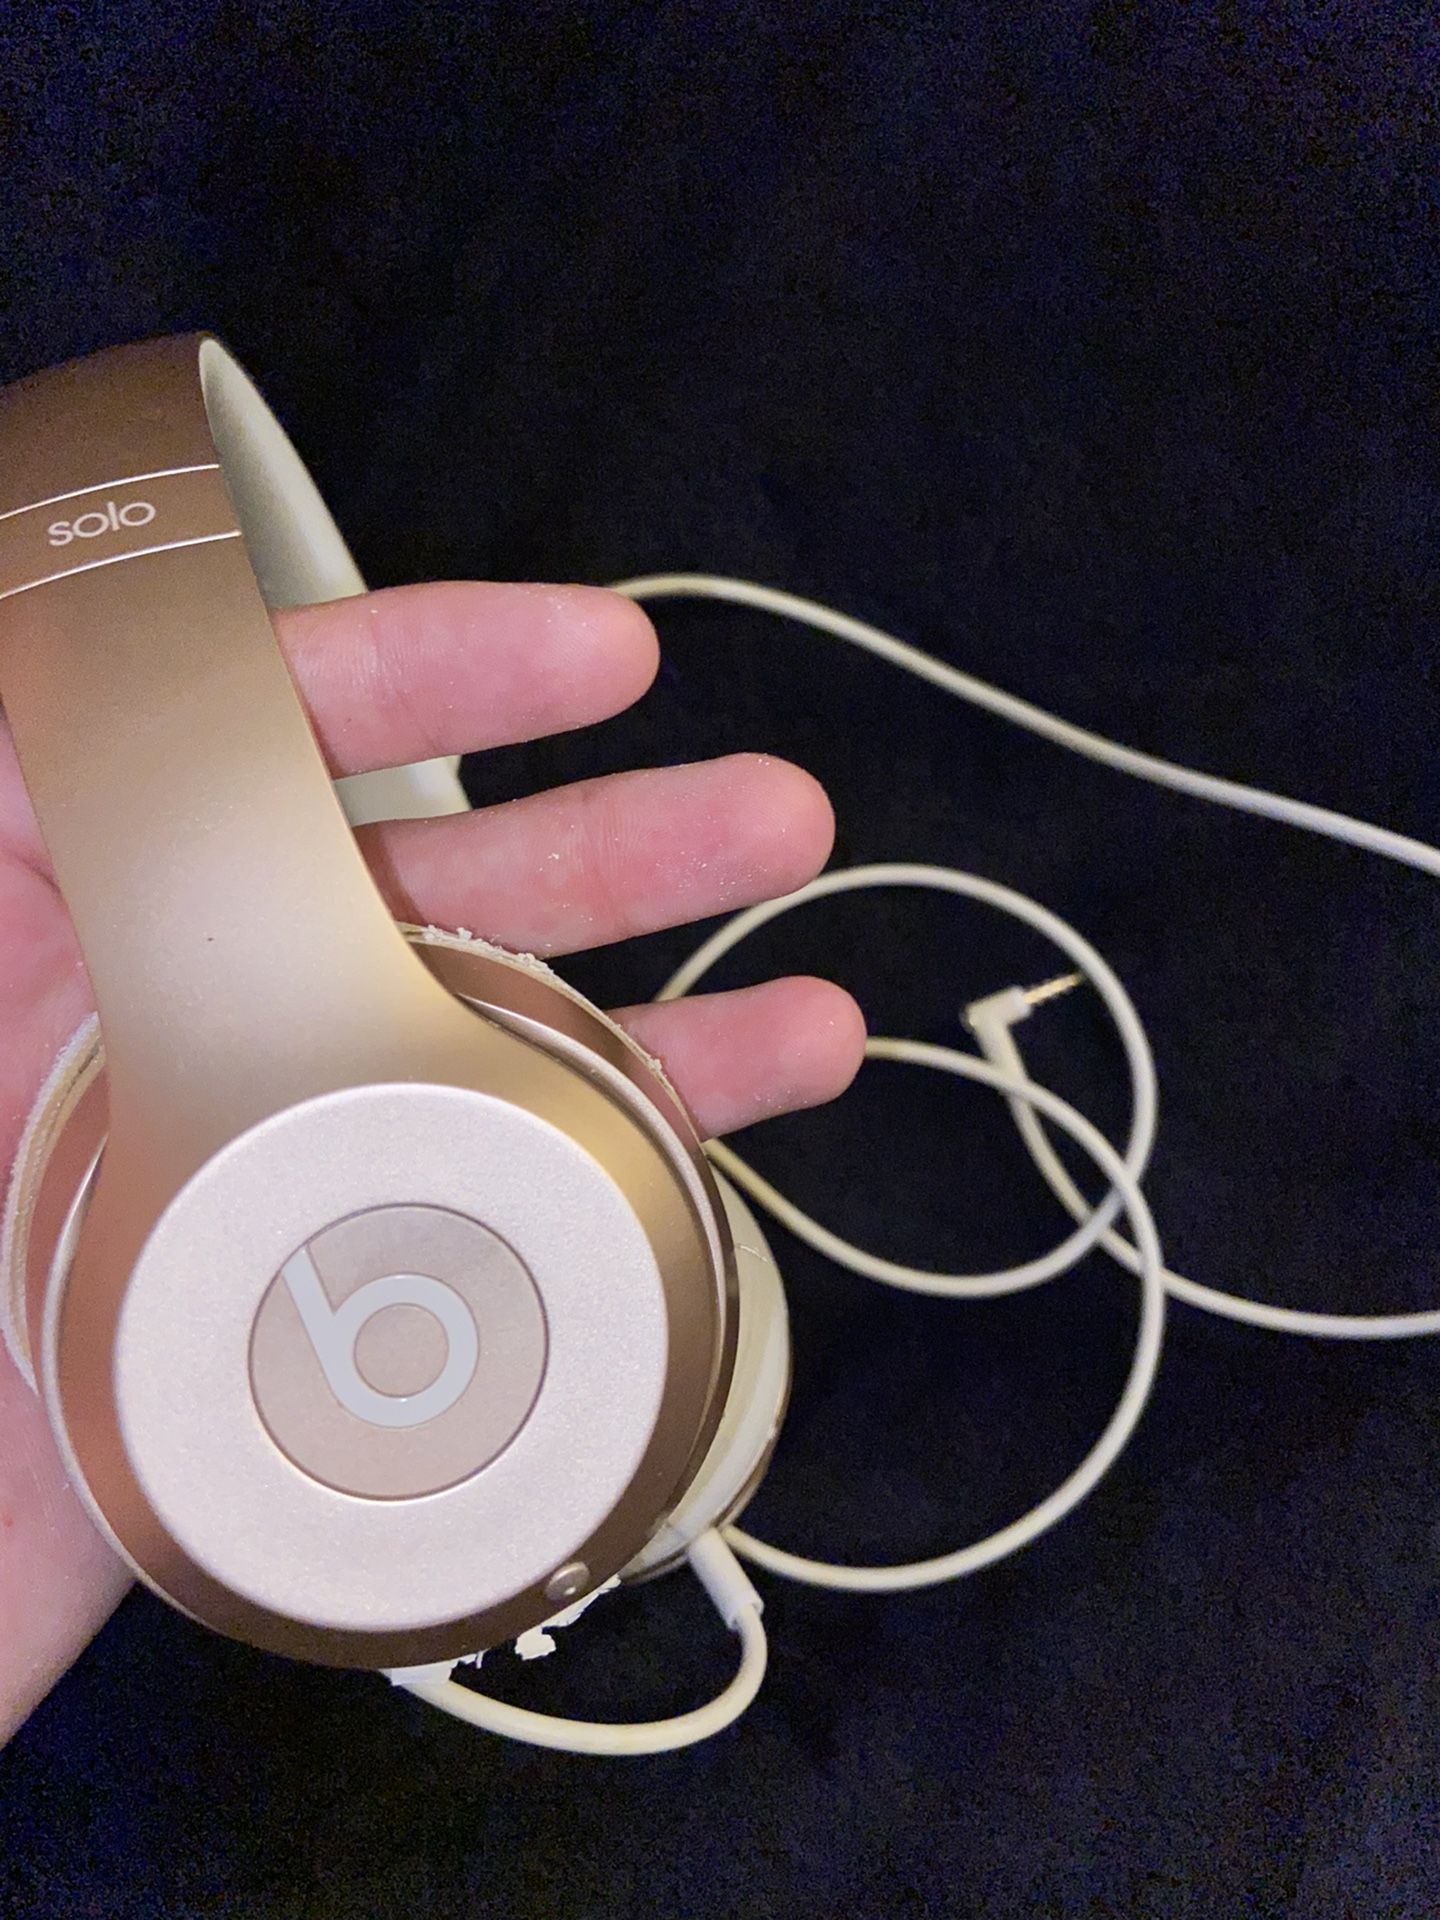 Rose Gold Beats Solo Wireless Headphones